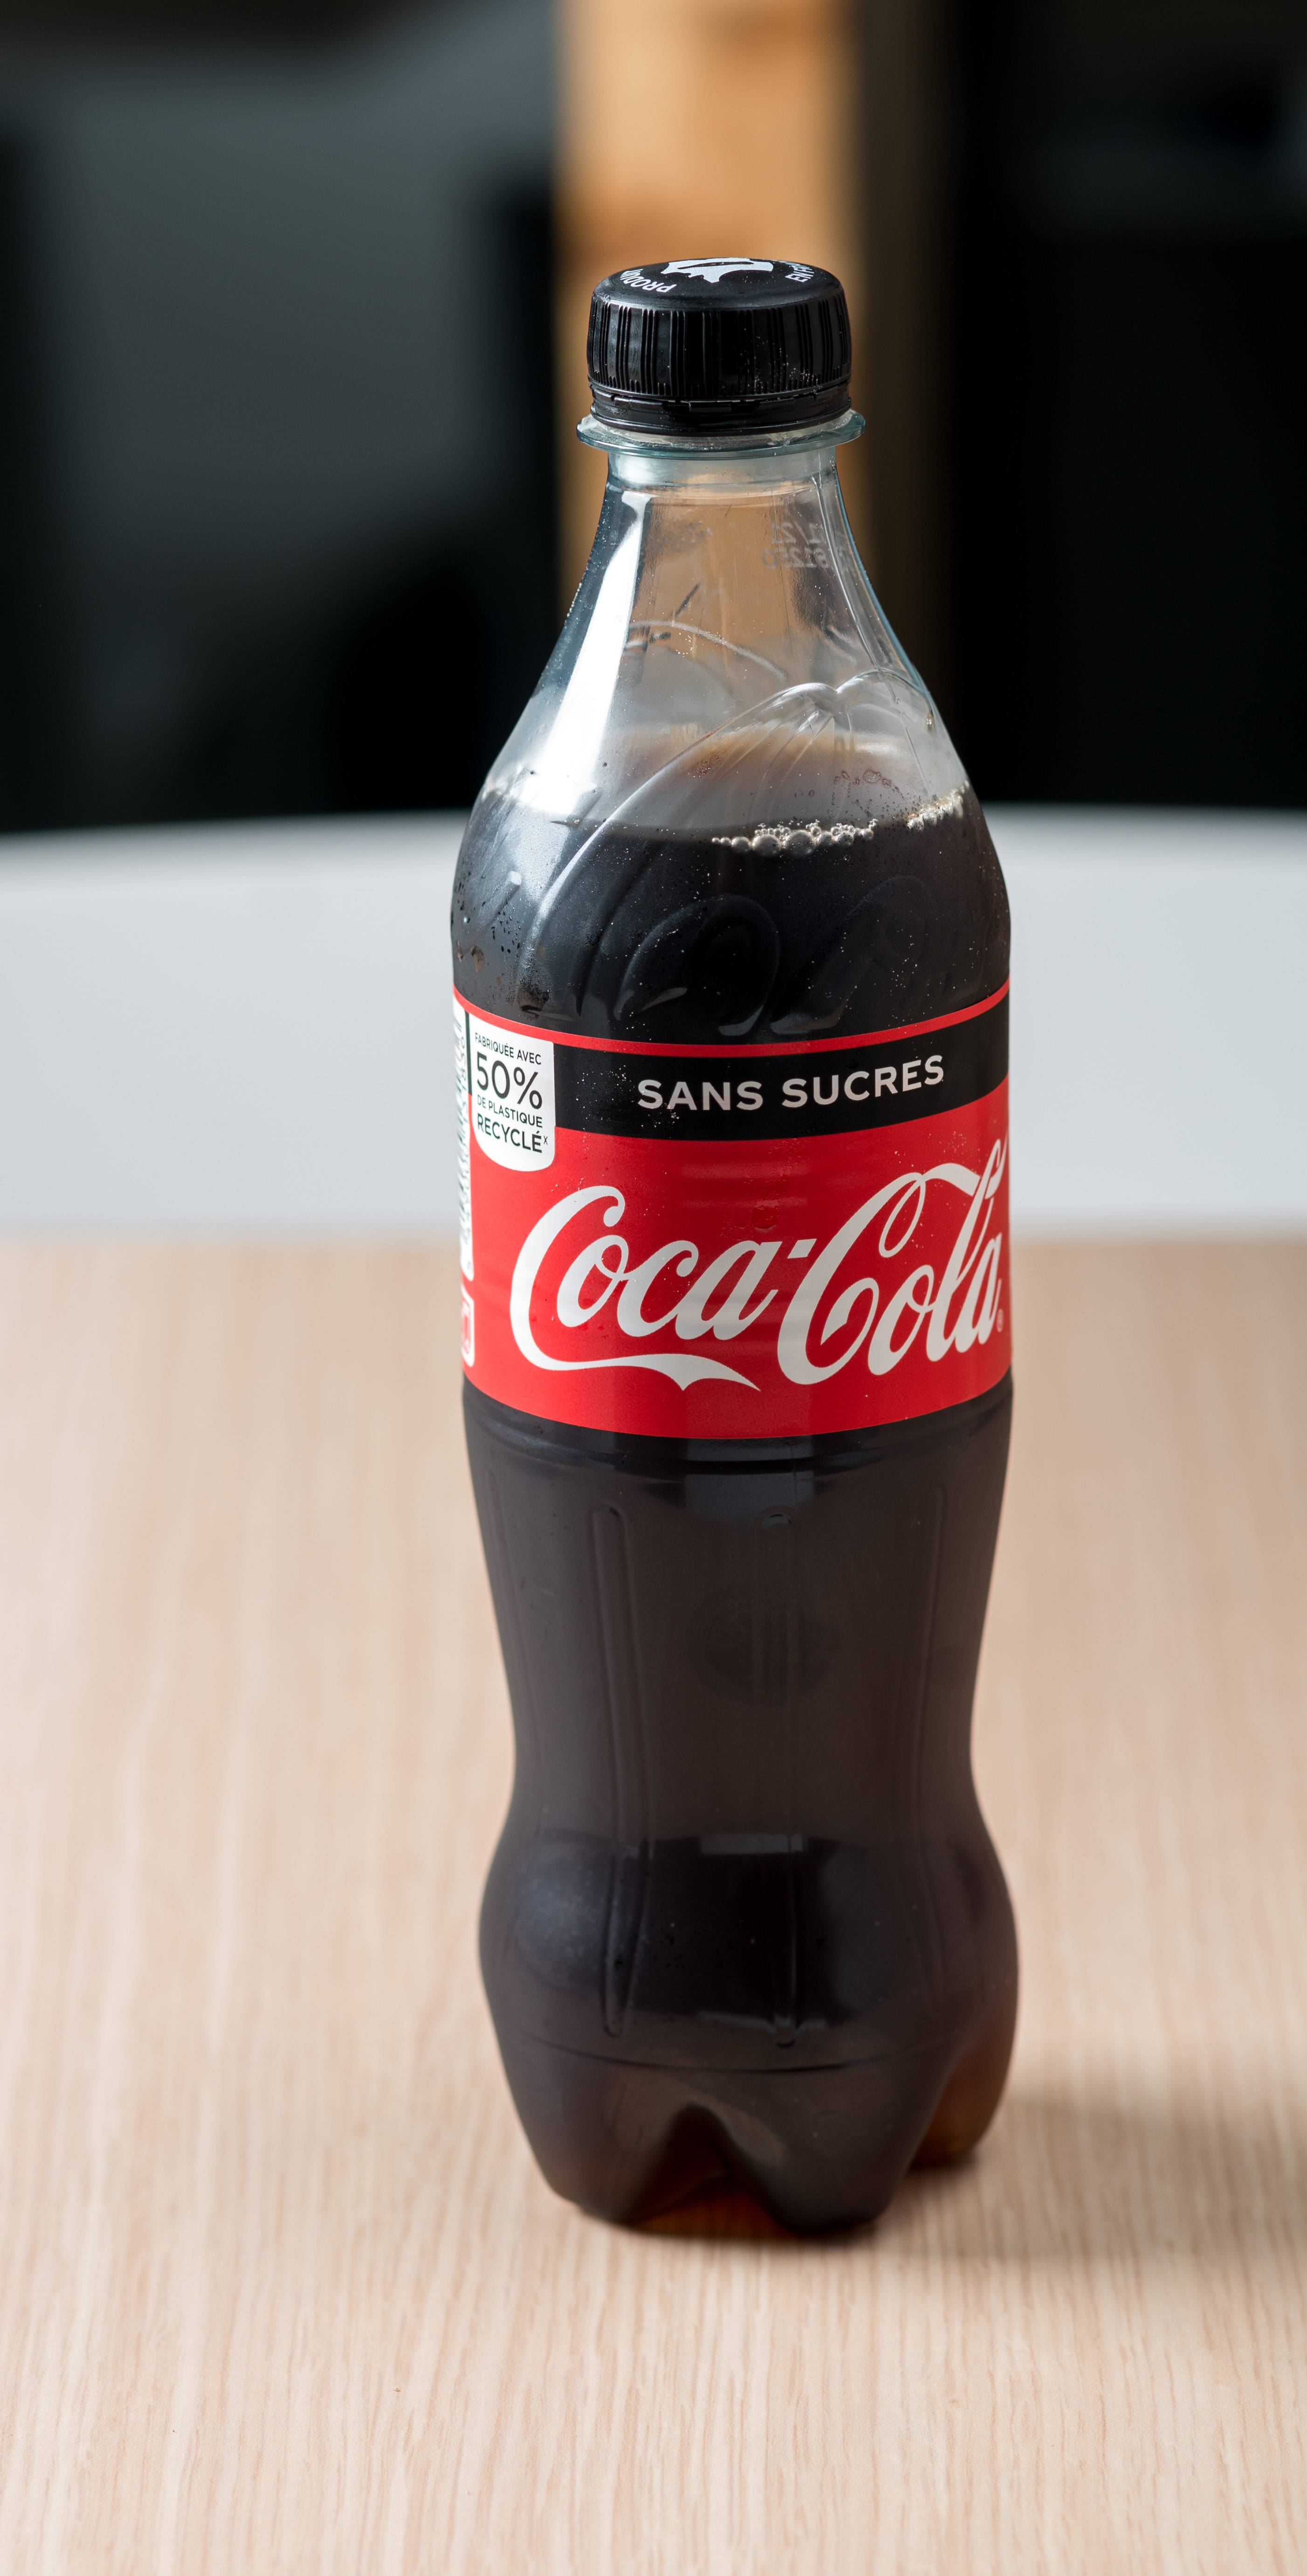 Coca cola zéro 50cl